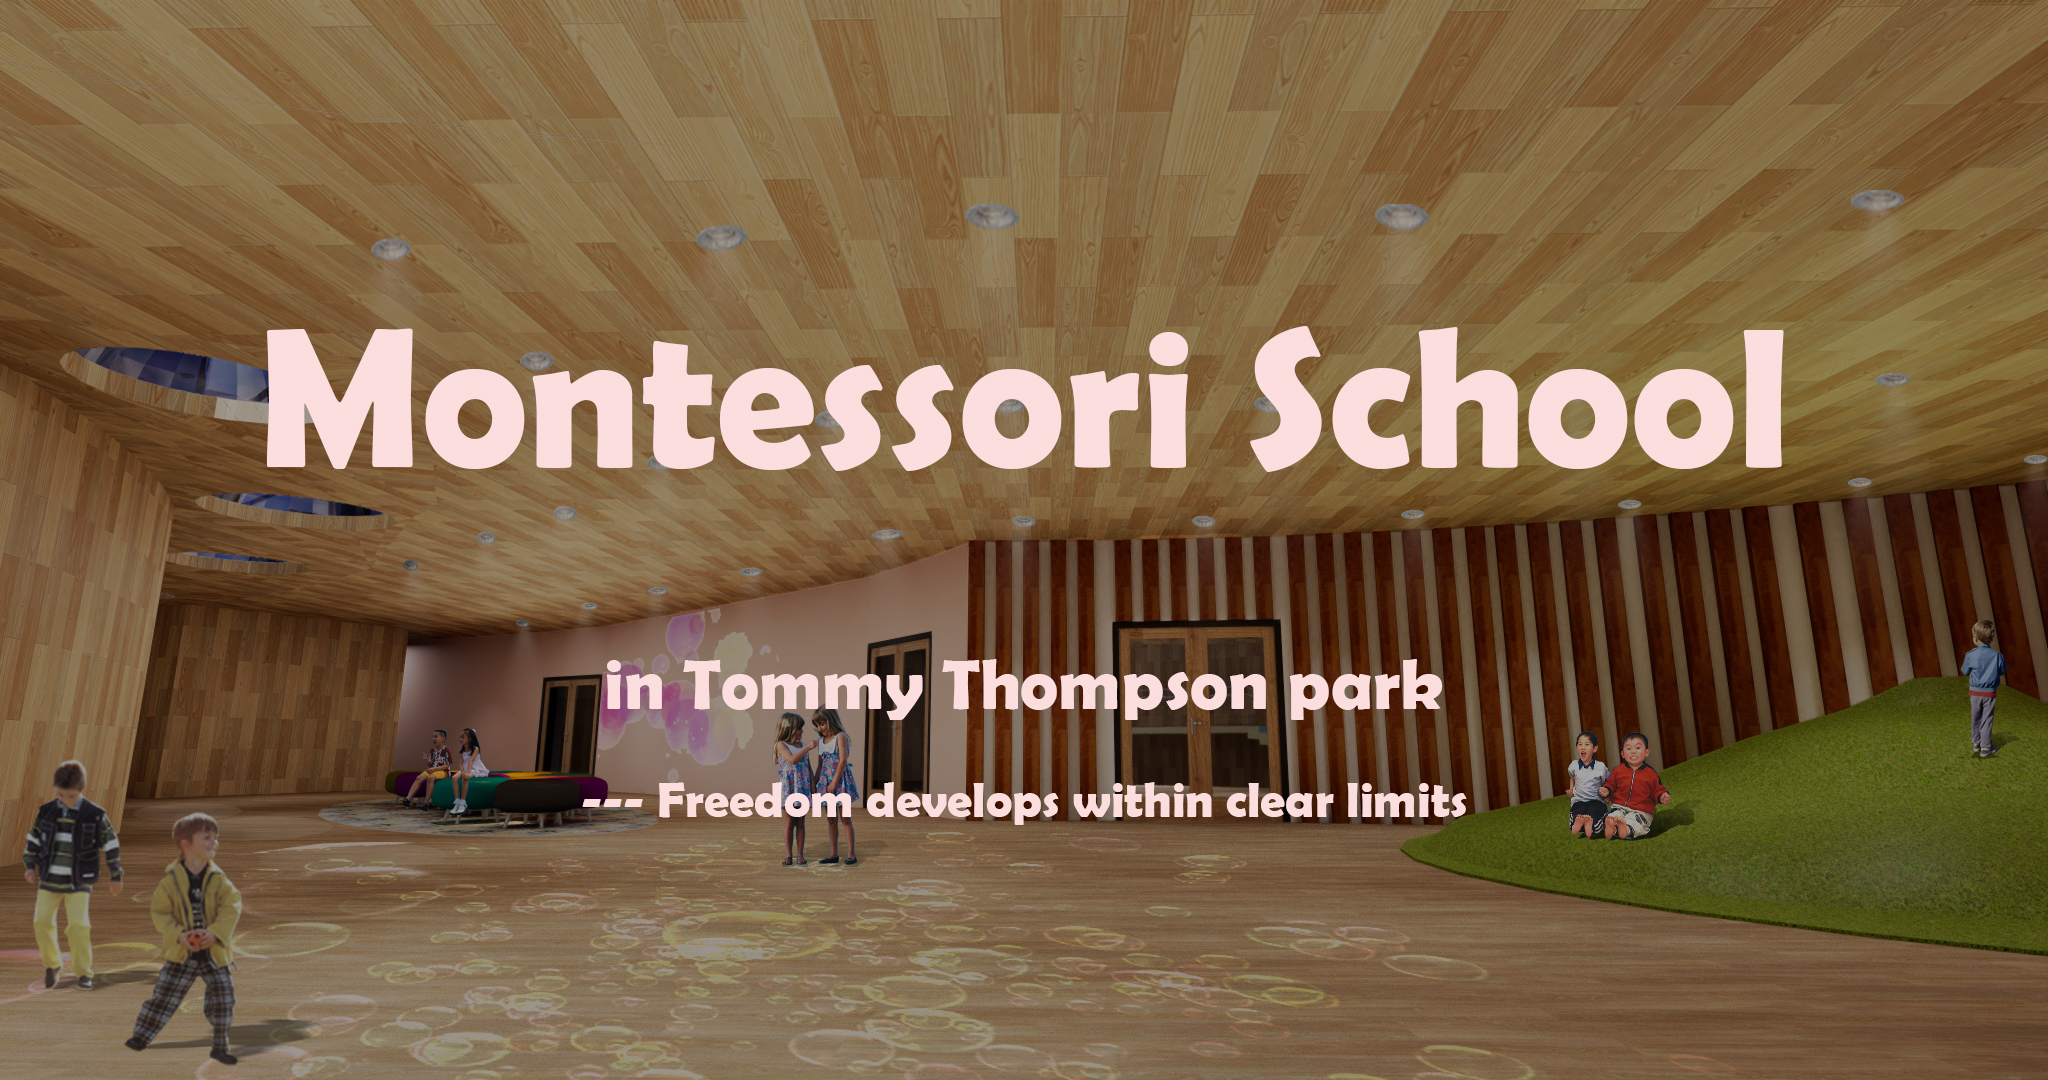 Montessori School in Tommy Thompson Park